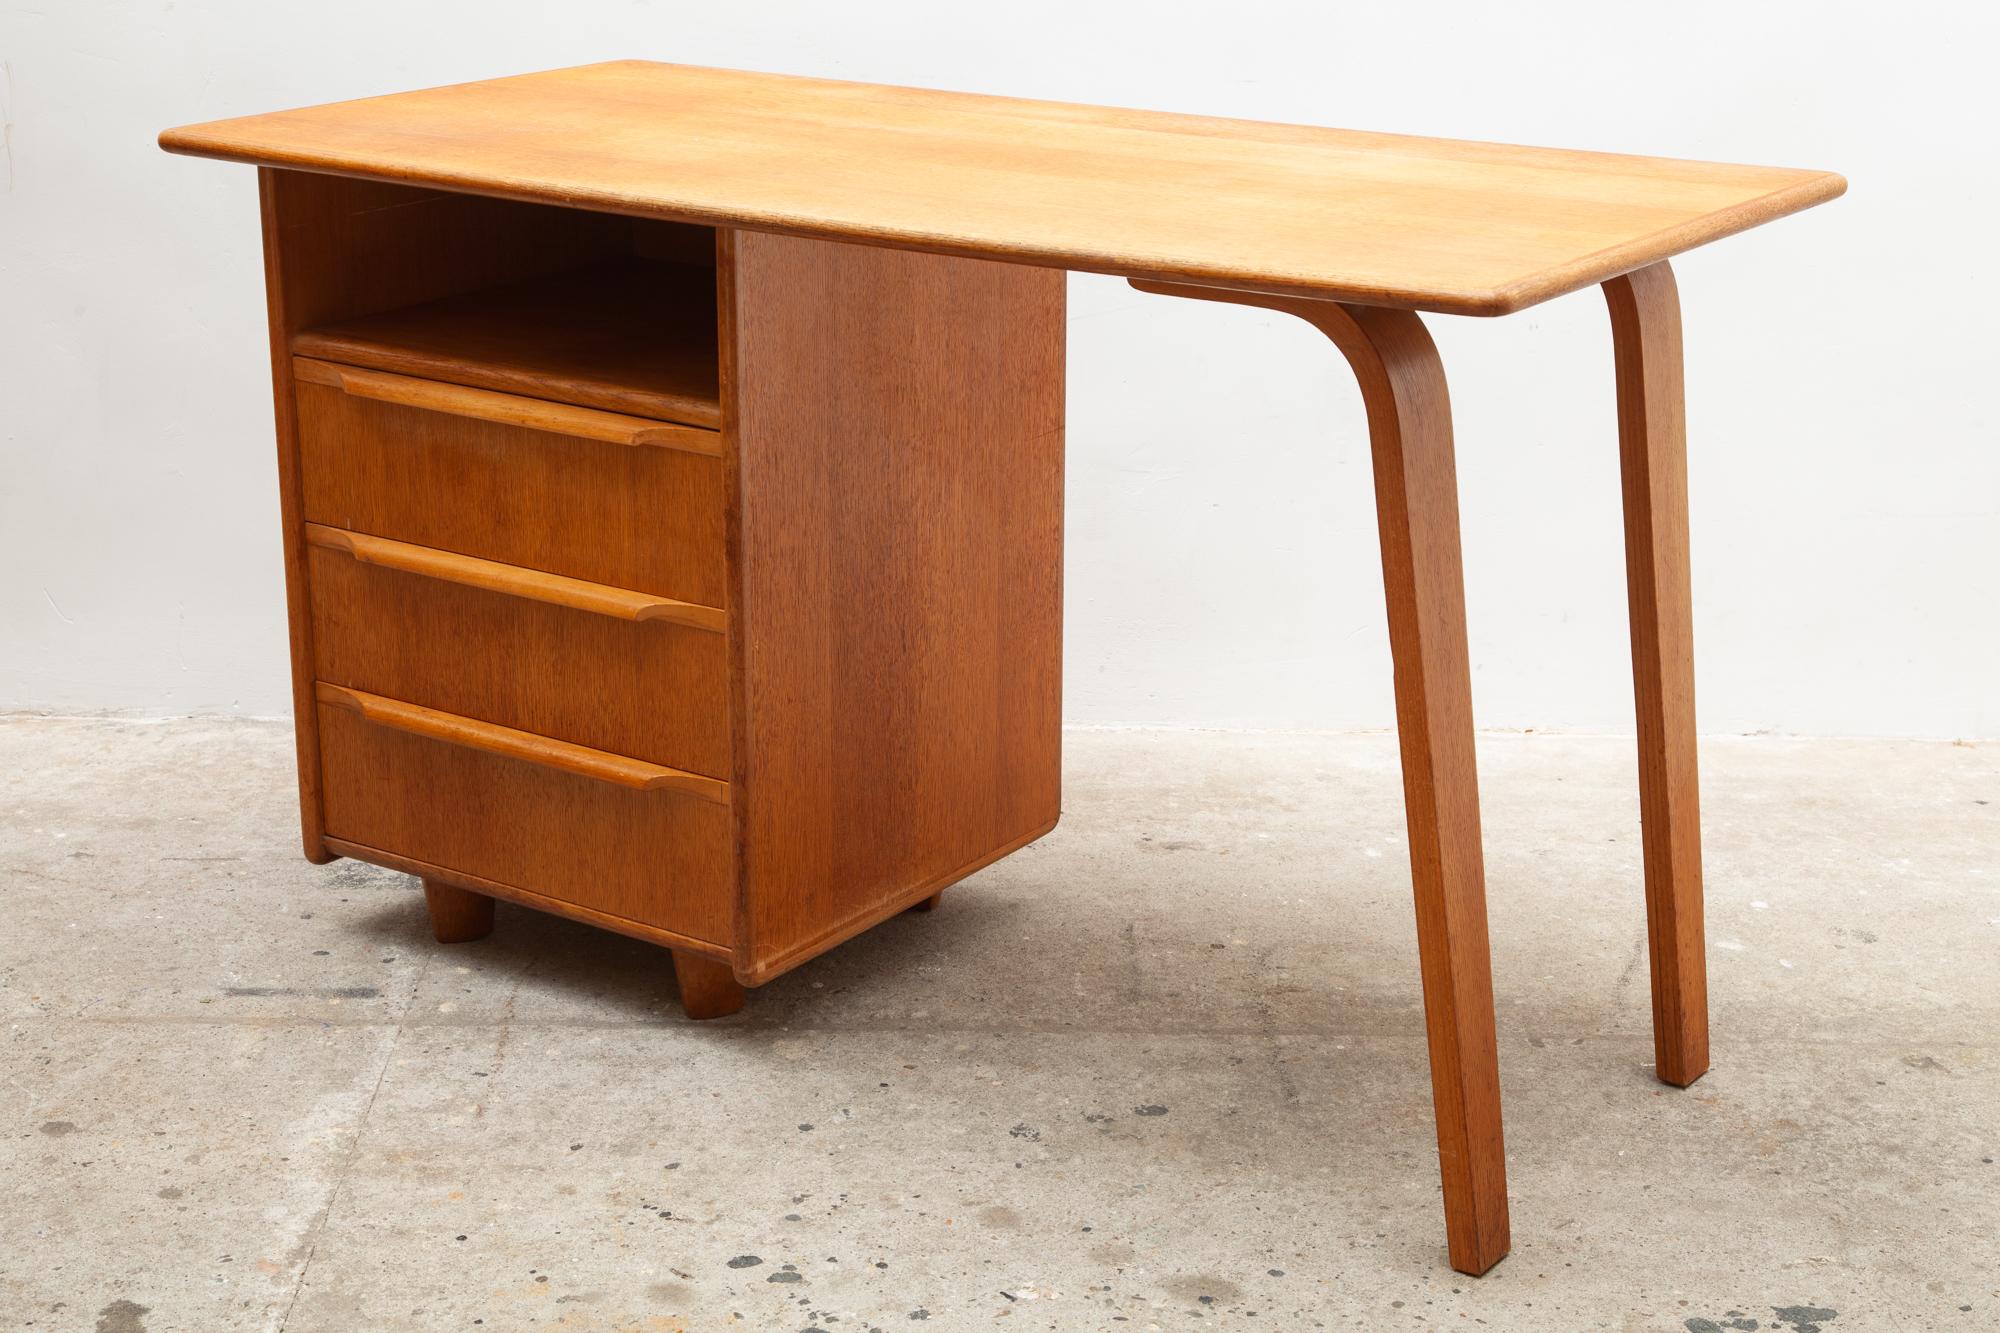 Dutch Vintage Oak Desk designed by Cees Braakman for UMS Pastoe, 1950s